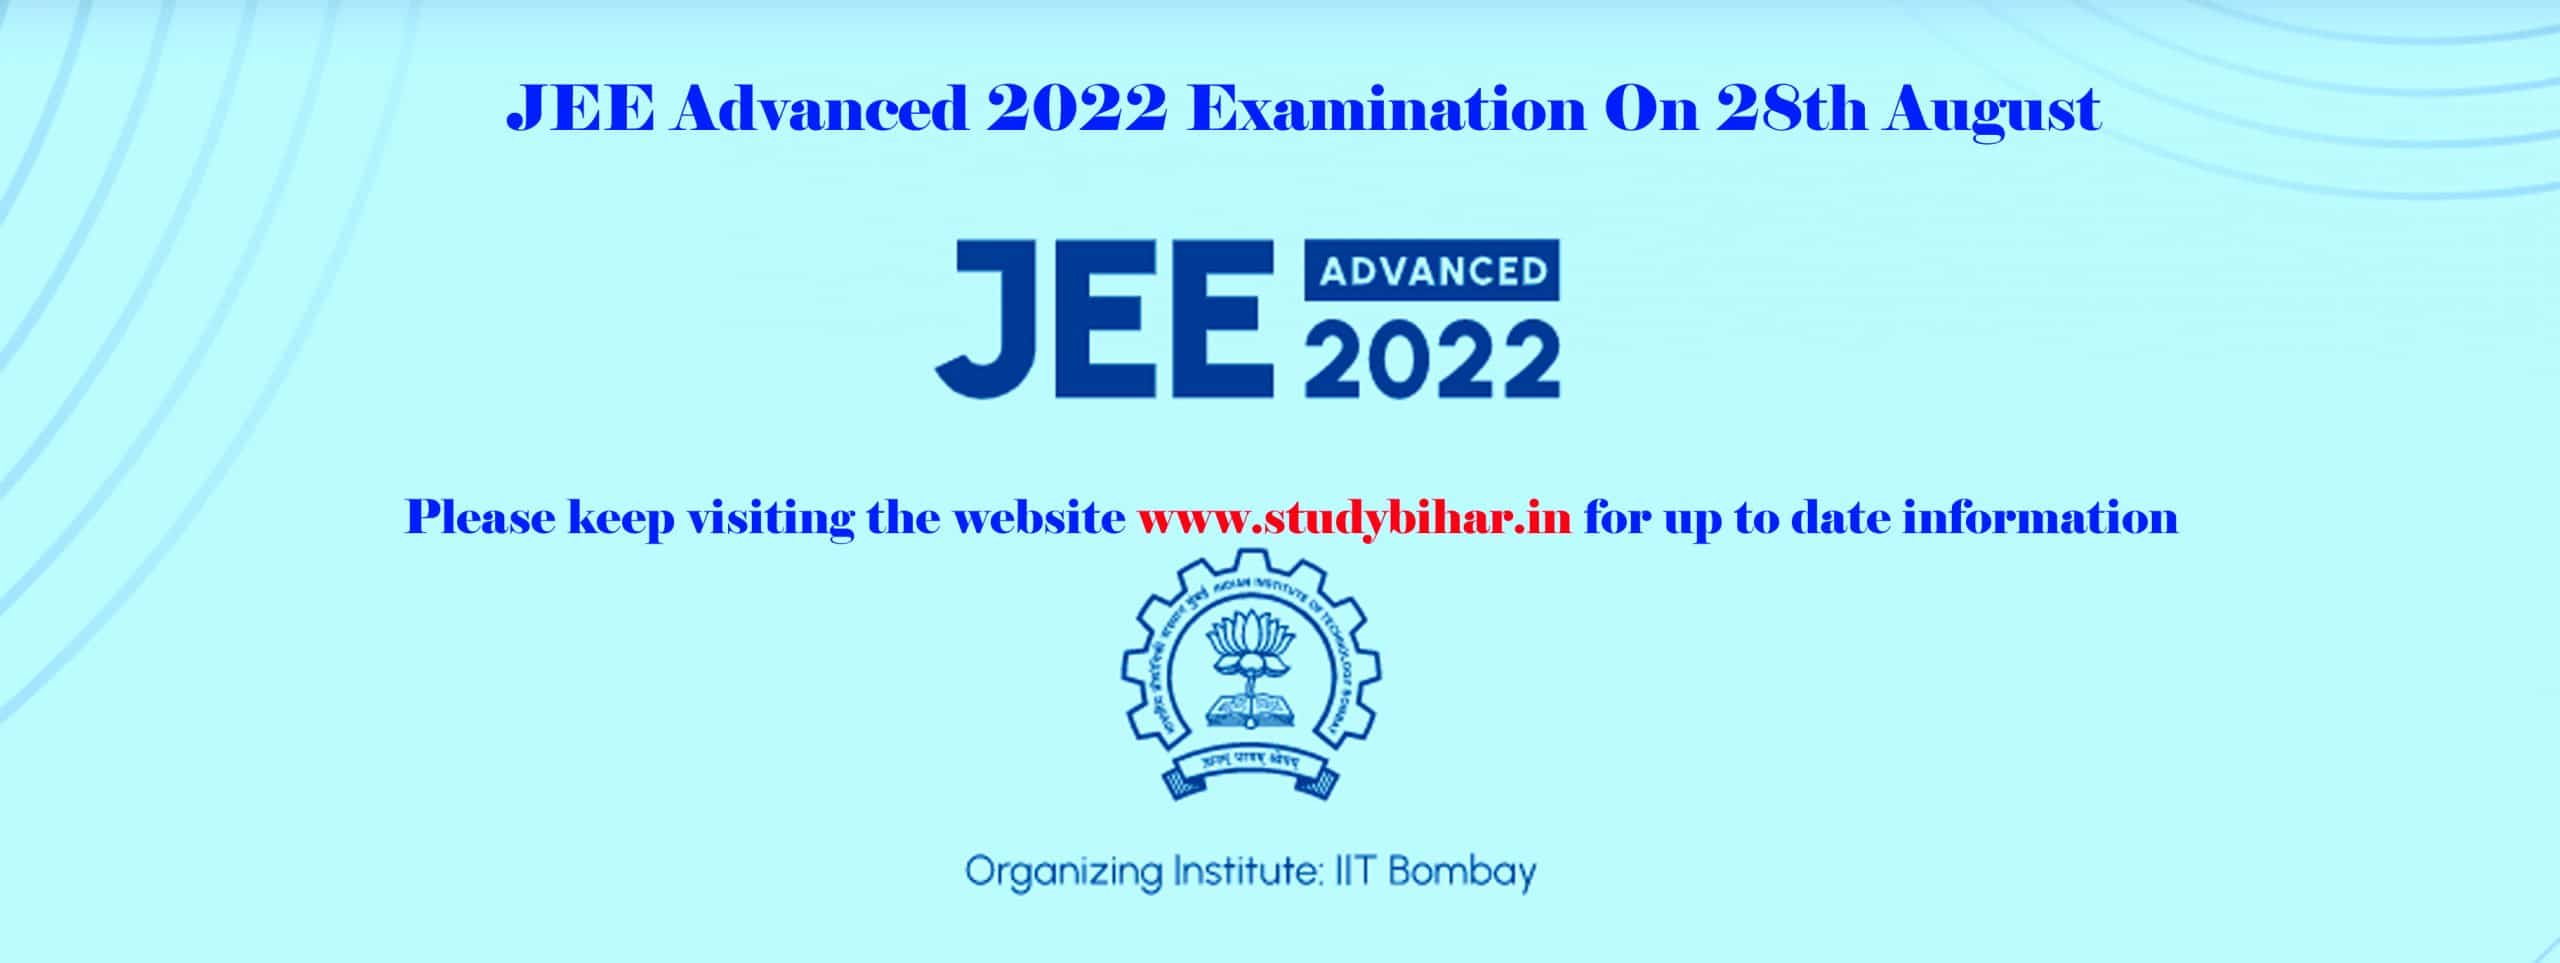 Jee advanced 2022 exam on 28 August